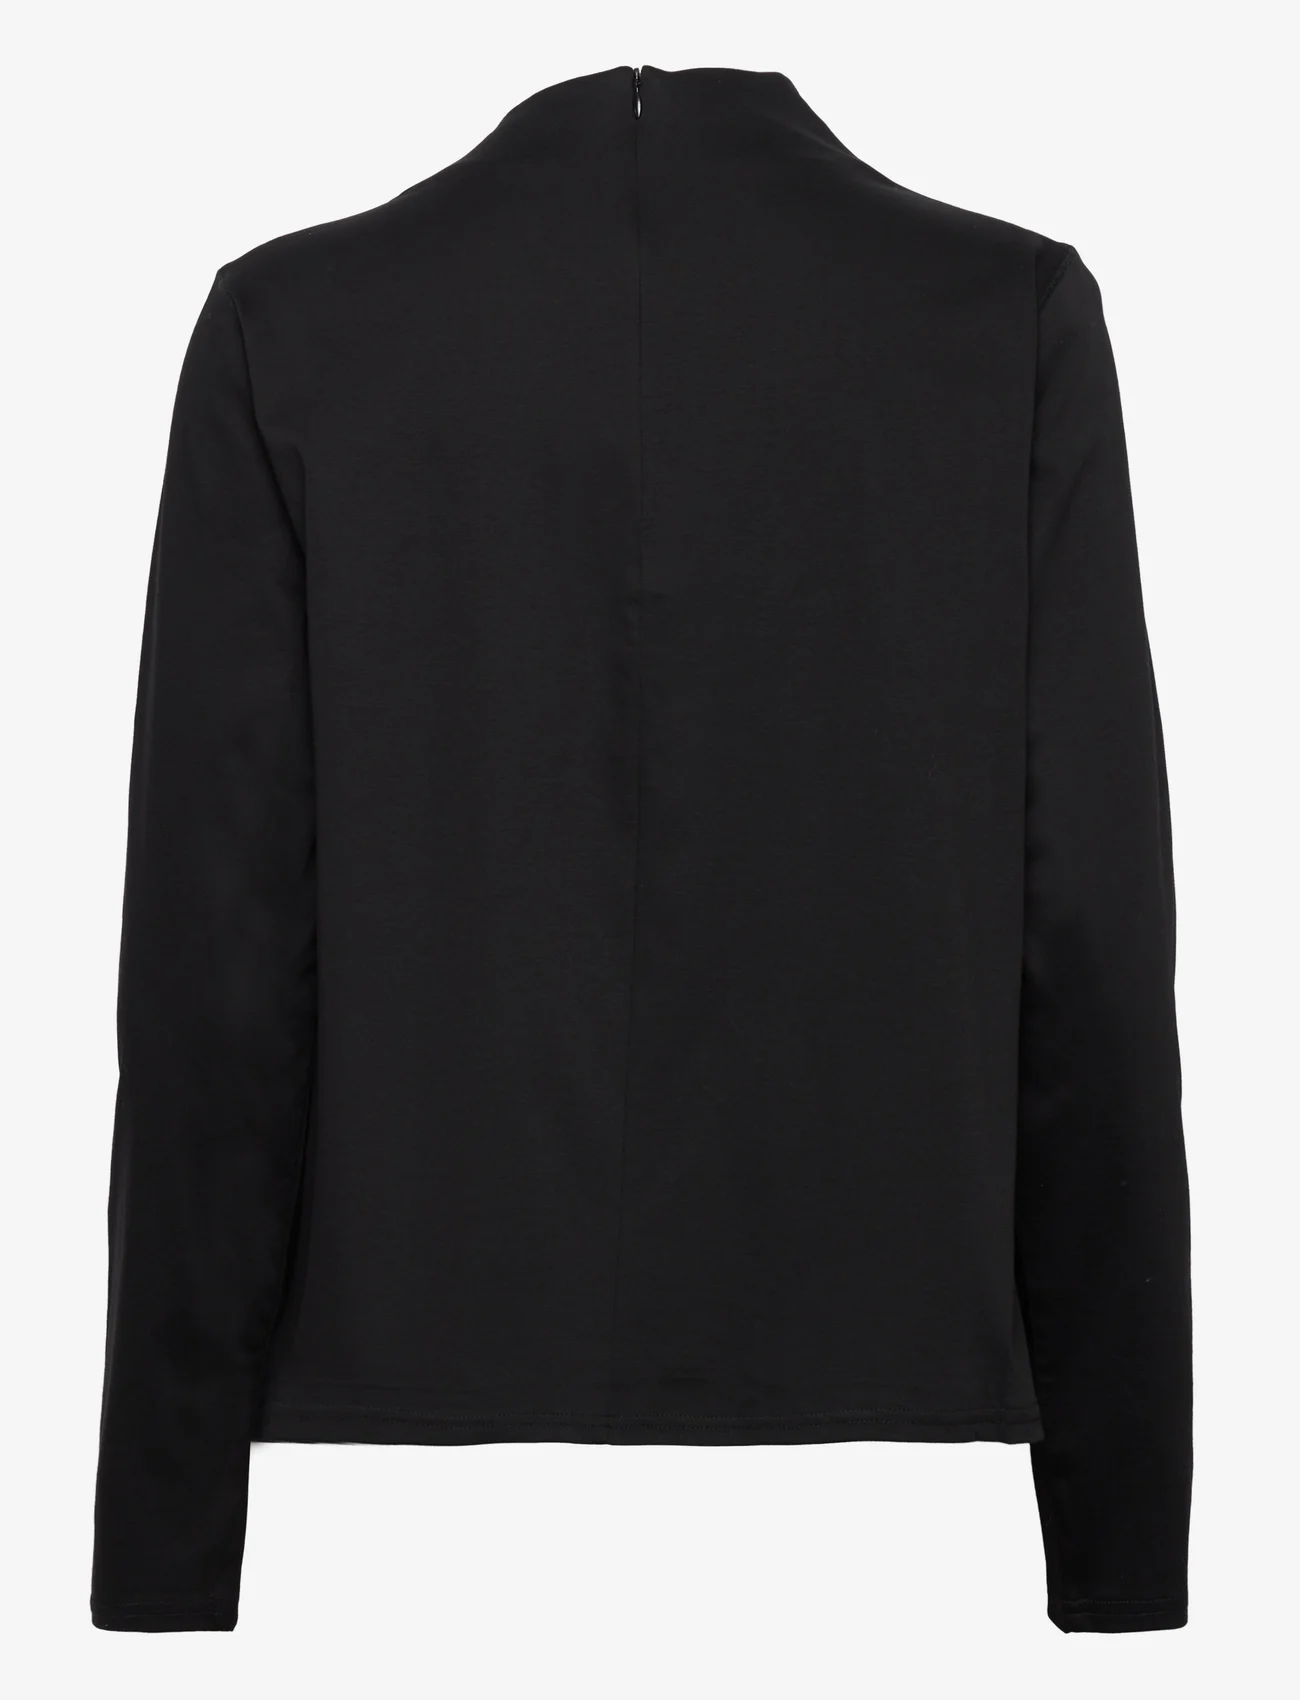 Ahlvar Gallery - Jade jersey blouse - langärmlige blusen - black - 1